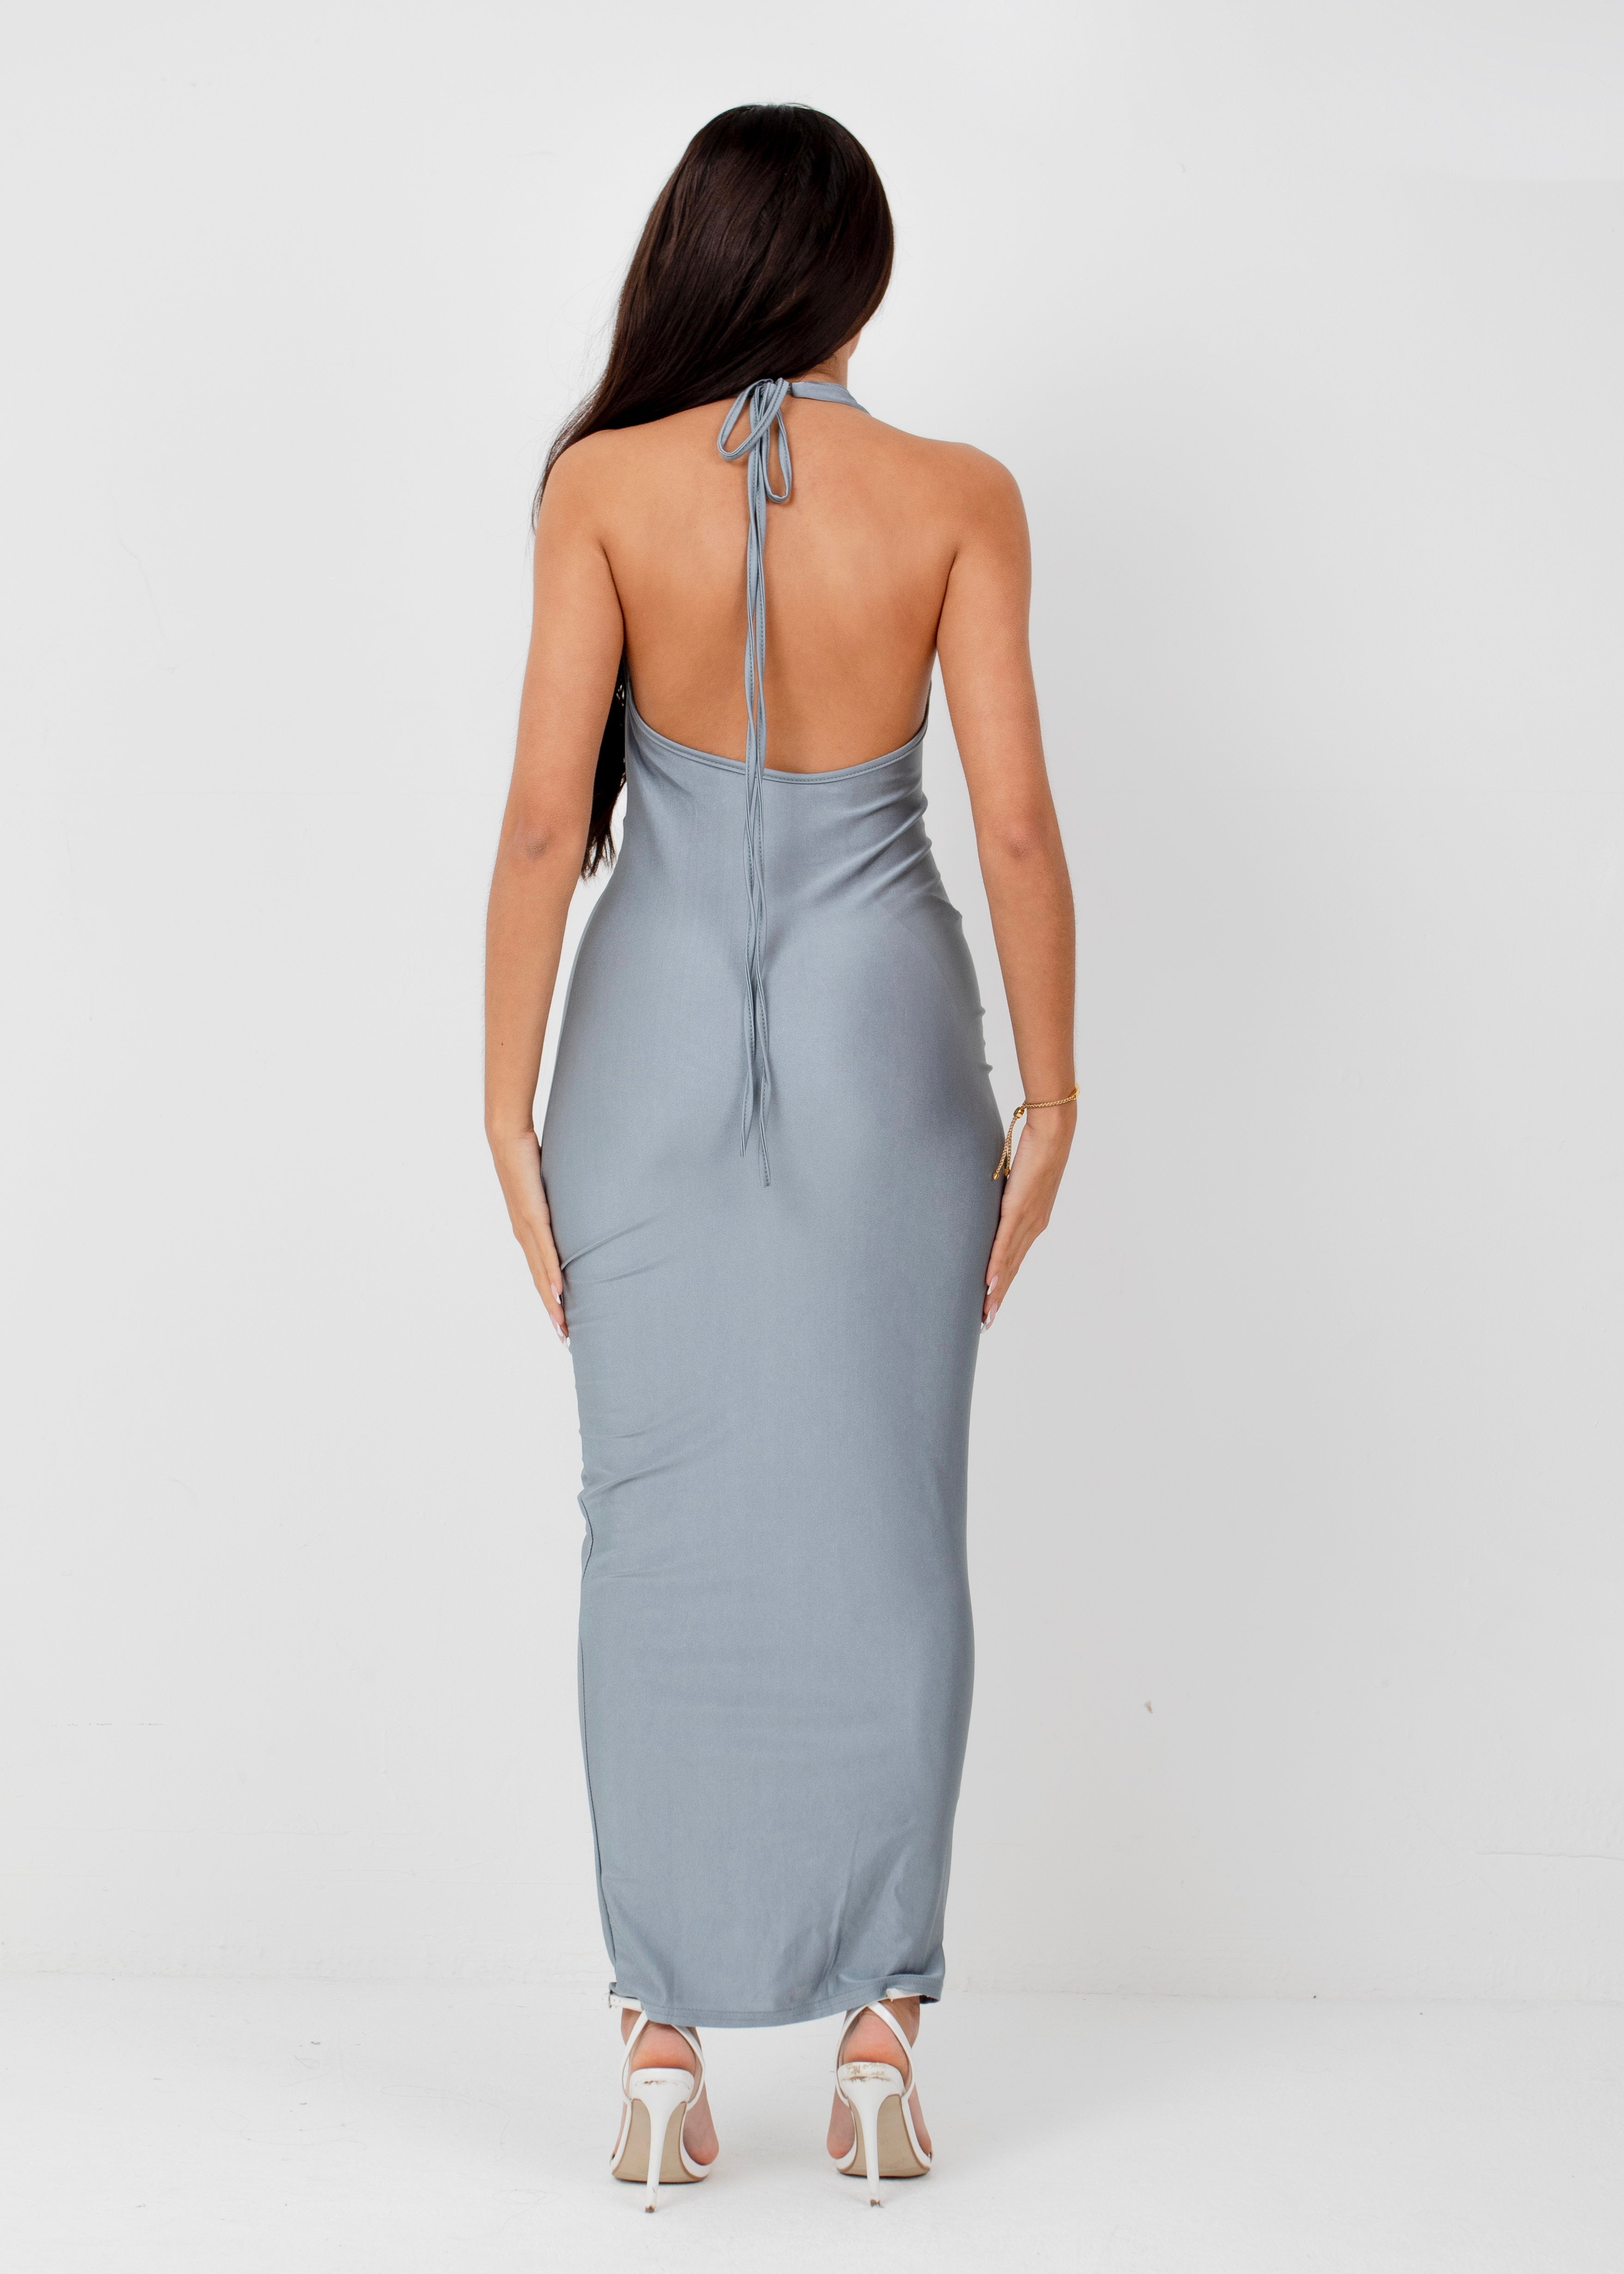 MARIELLA - Silver Maxi Dress